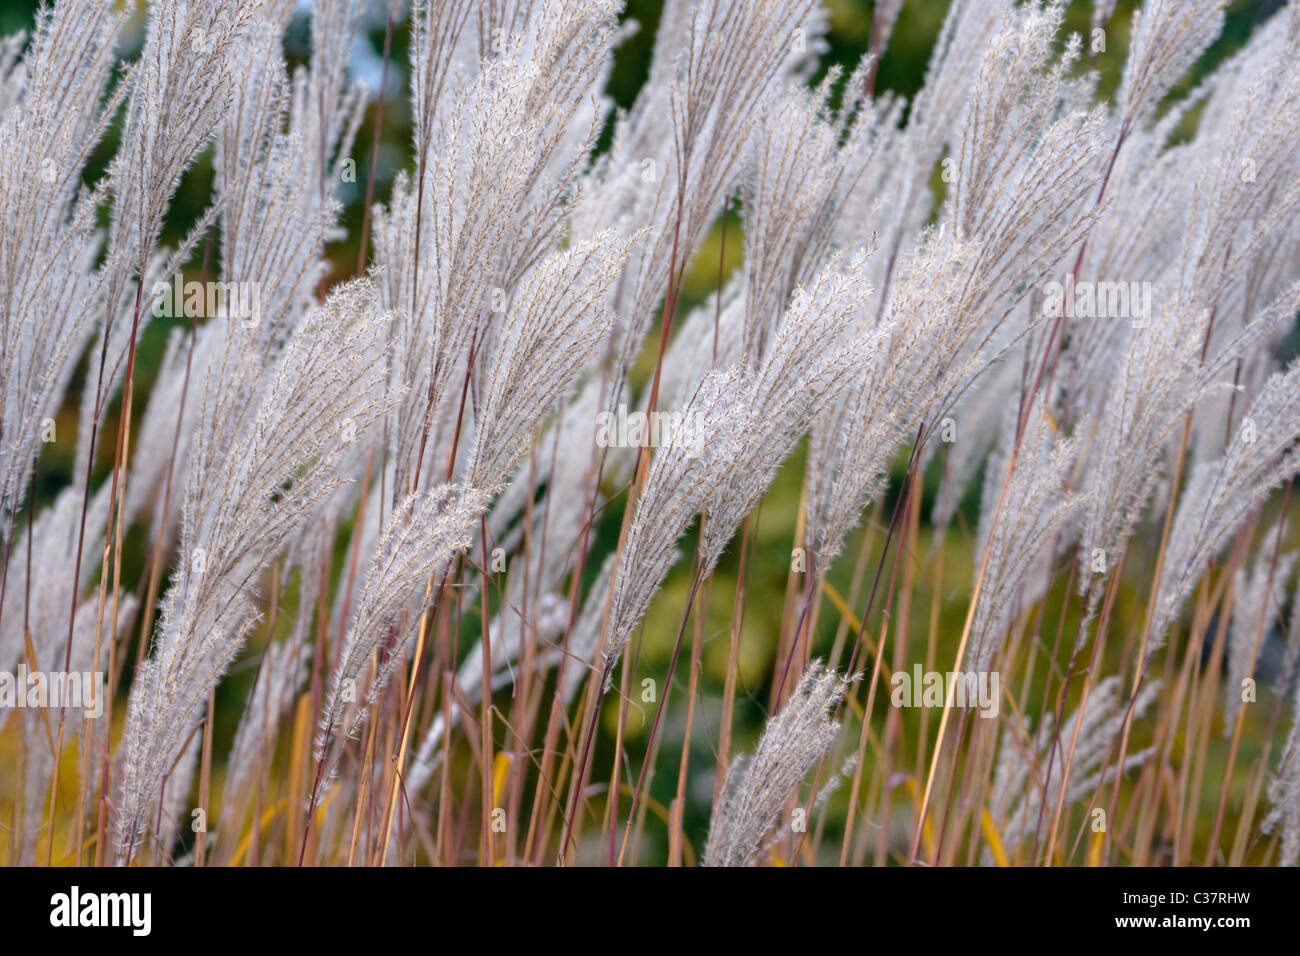 Amur silvergrass (Miscanthus sacchariflorus) Stock Photo